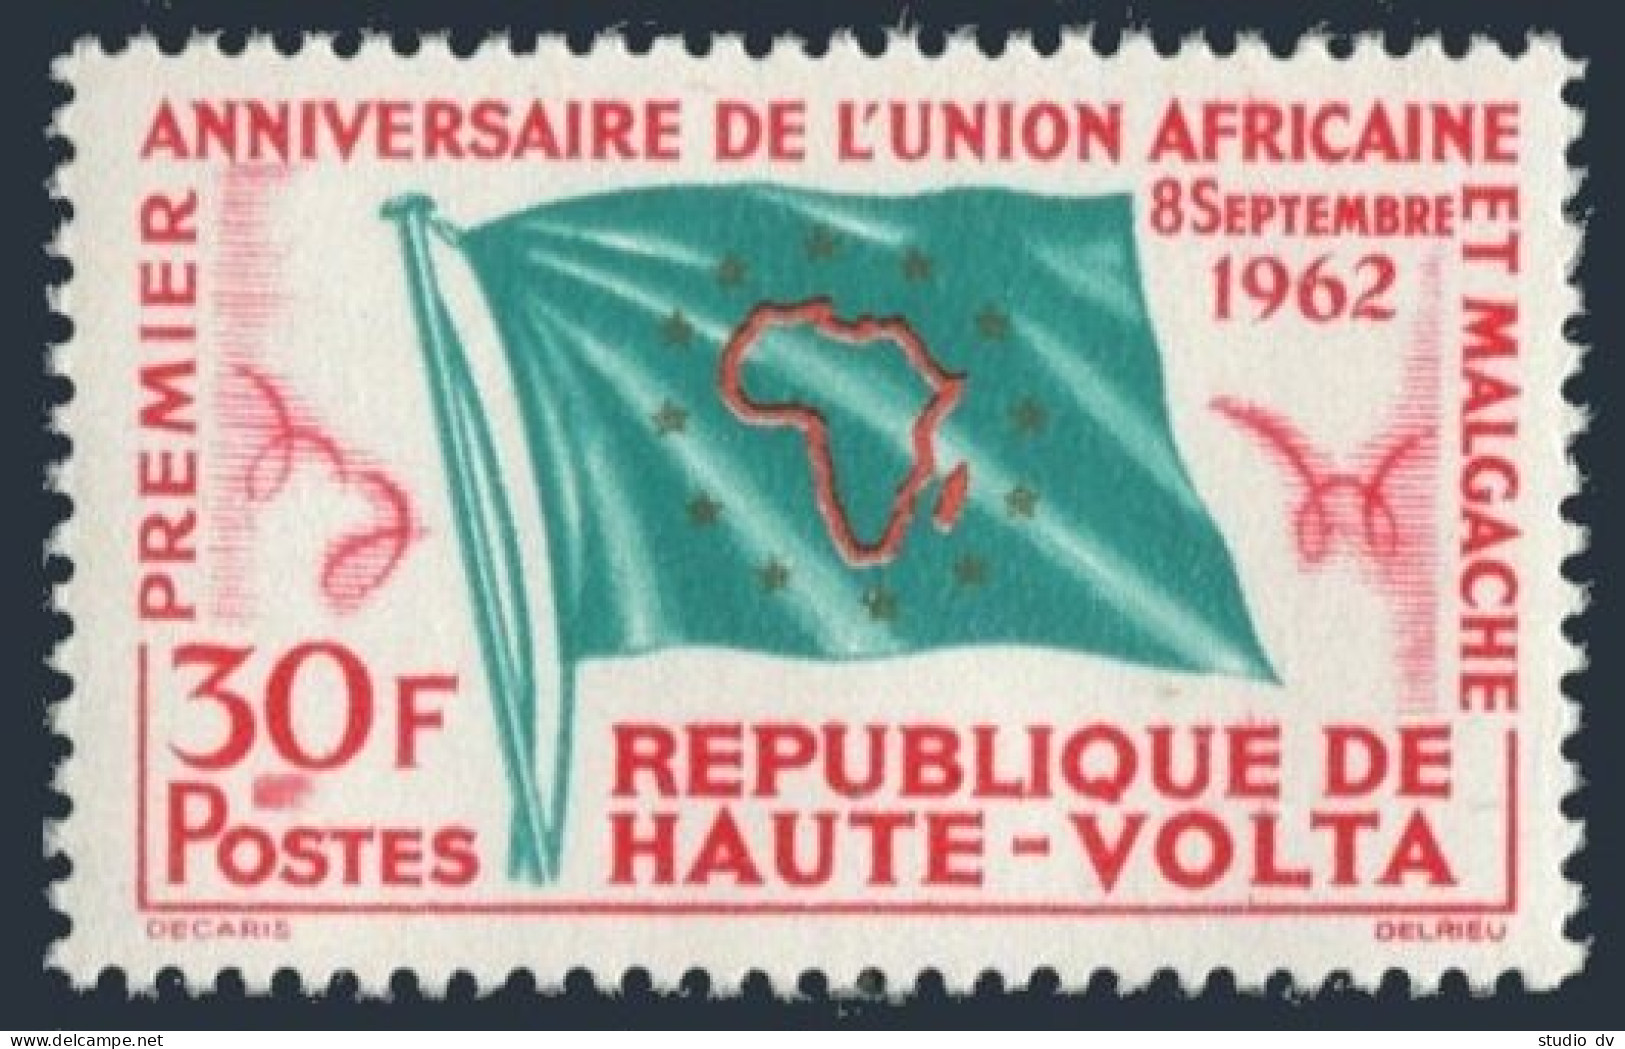 Burkina Faso 106 Block/4, MNH. Michel 111. African-Malagasy Union, 1962. Flag. - Burkina Faso (1984-...)